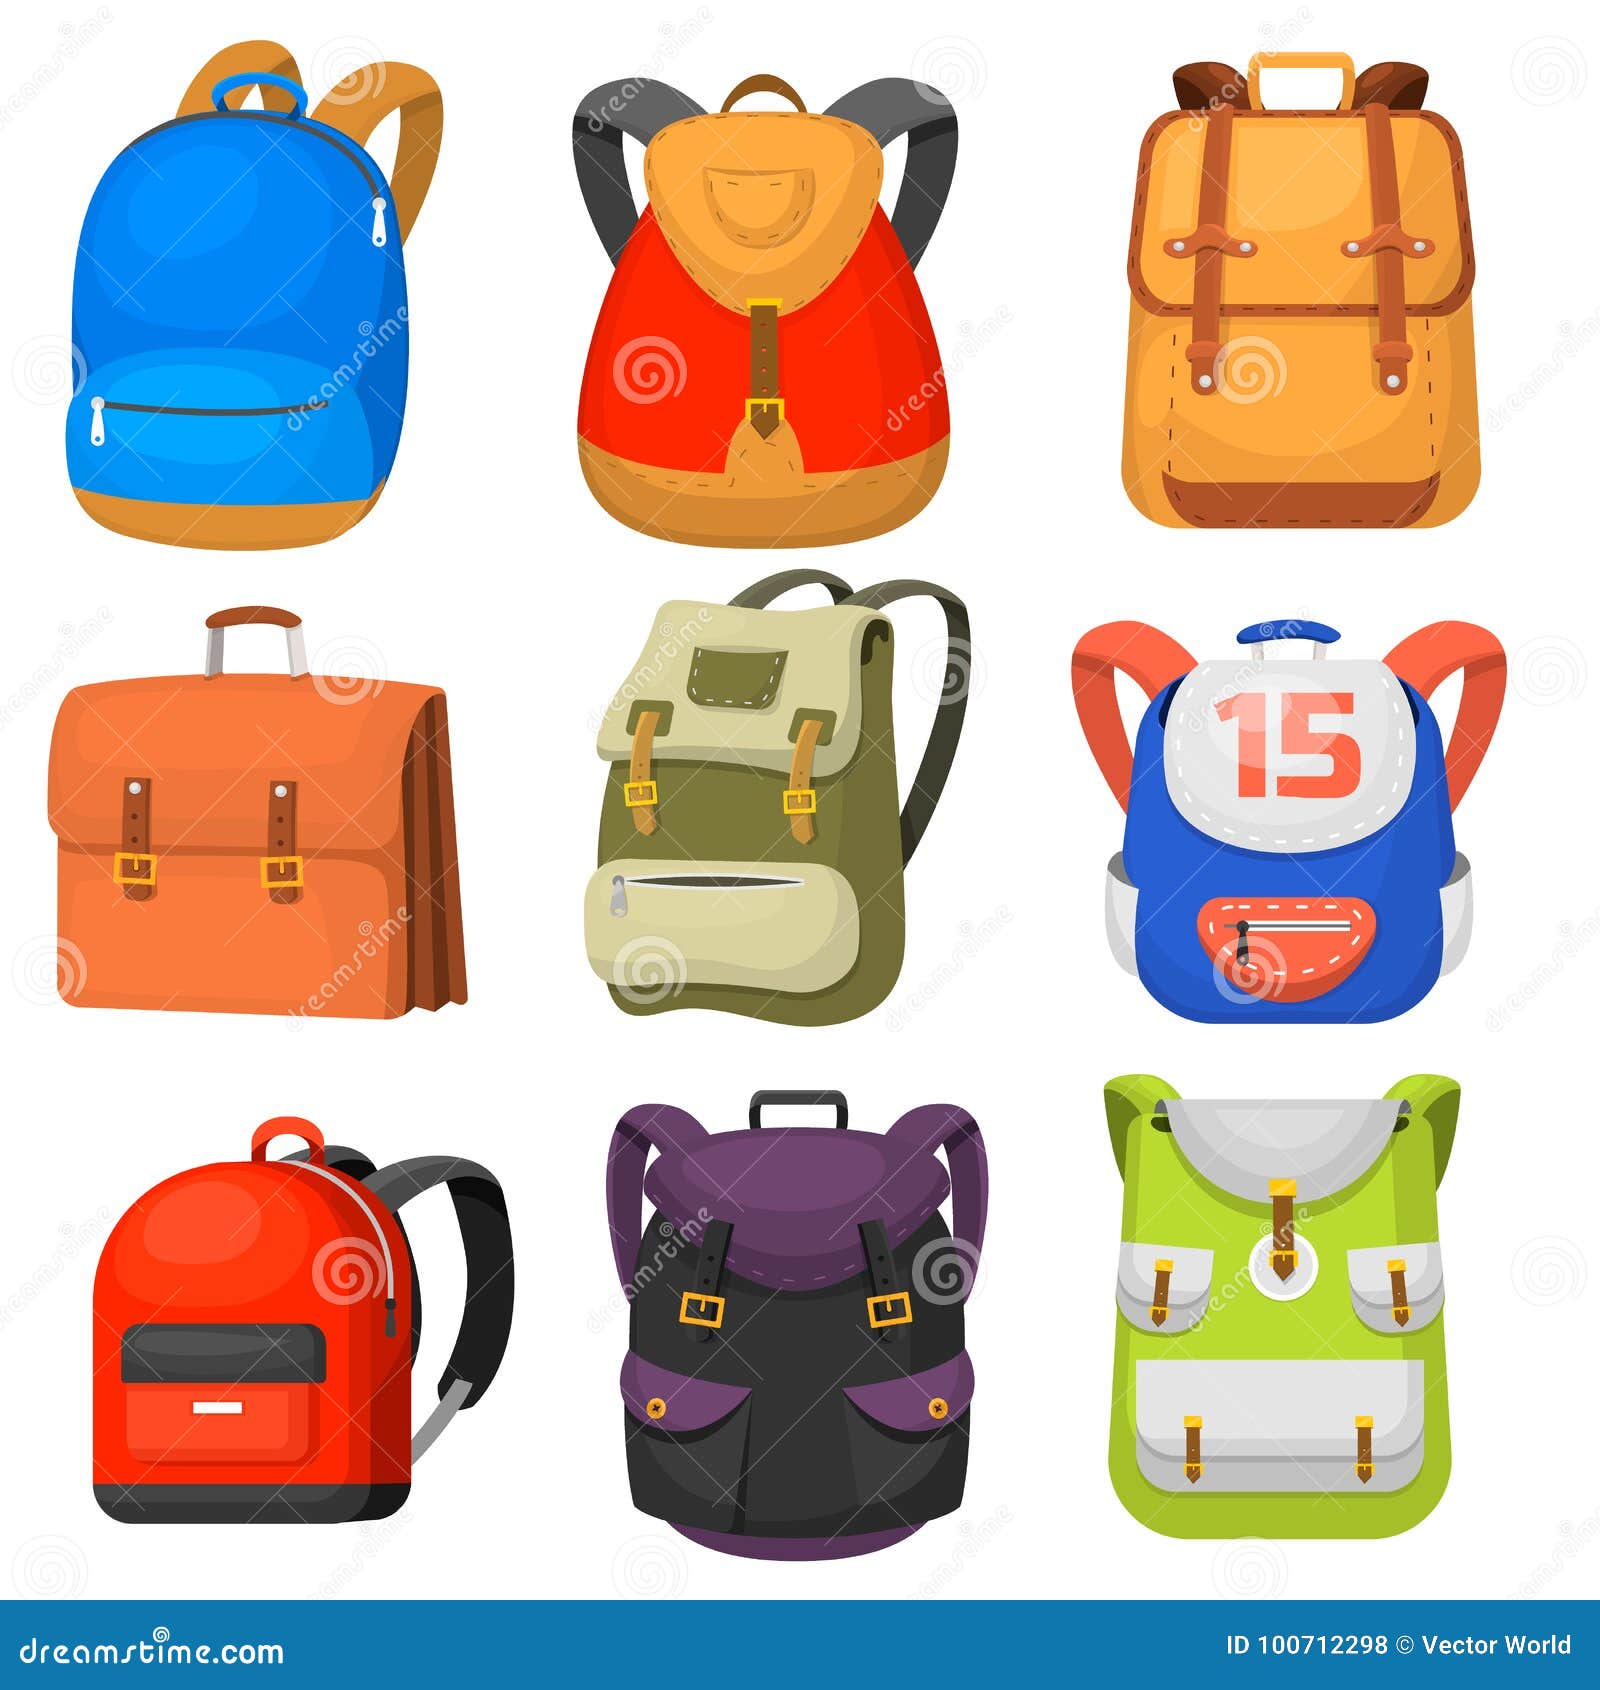 back to school kids school backpack  